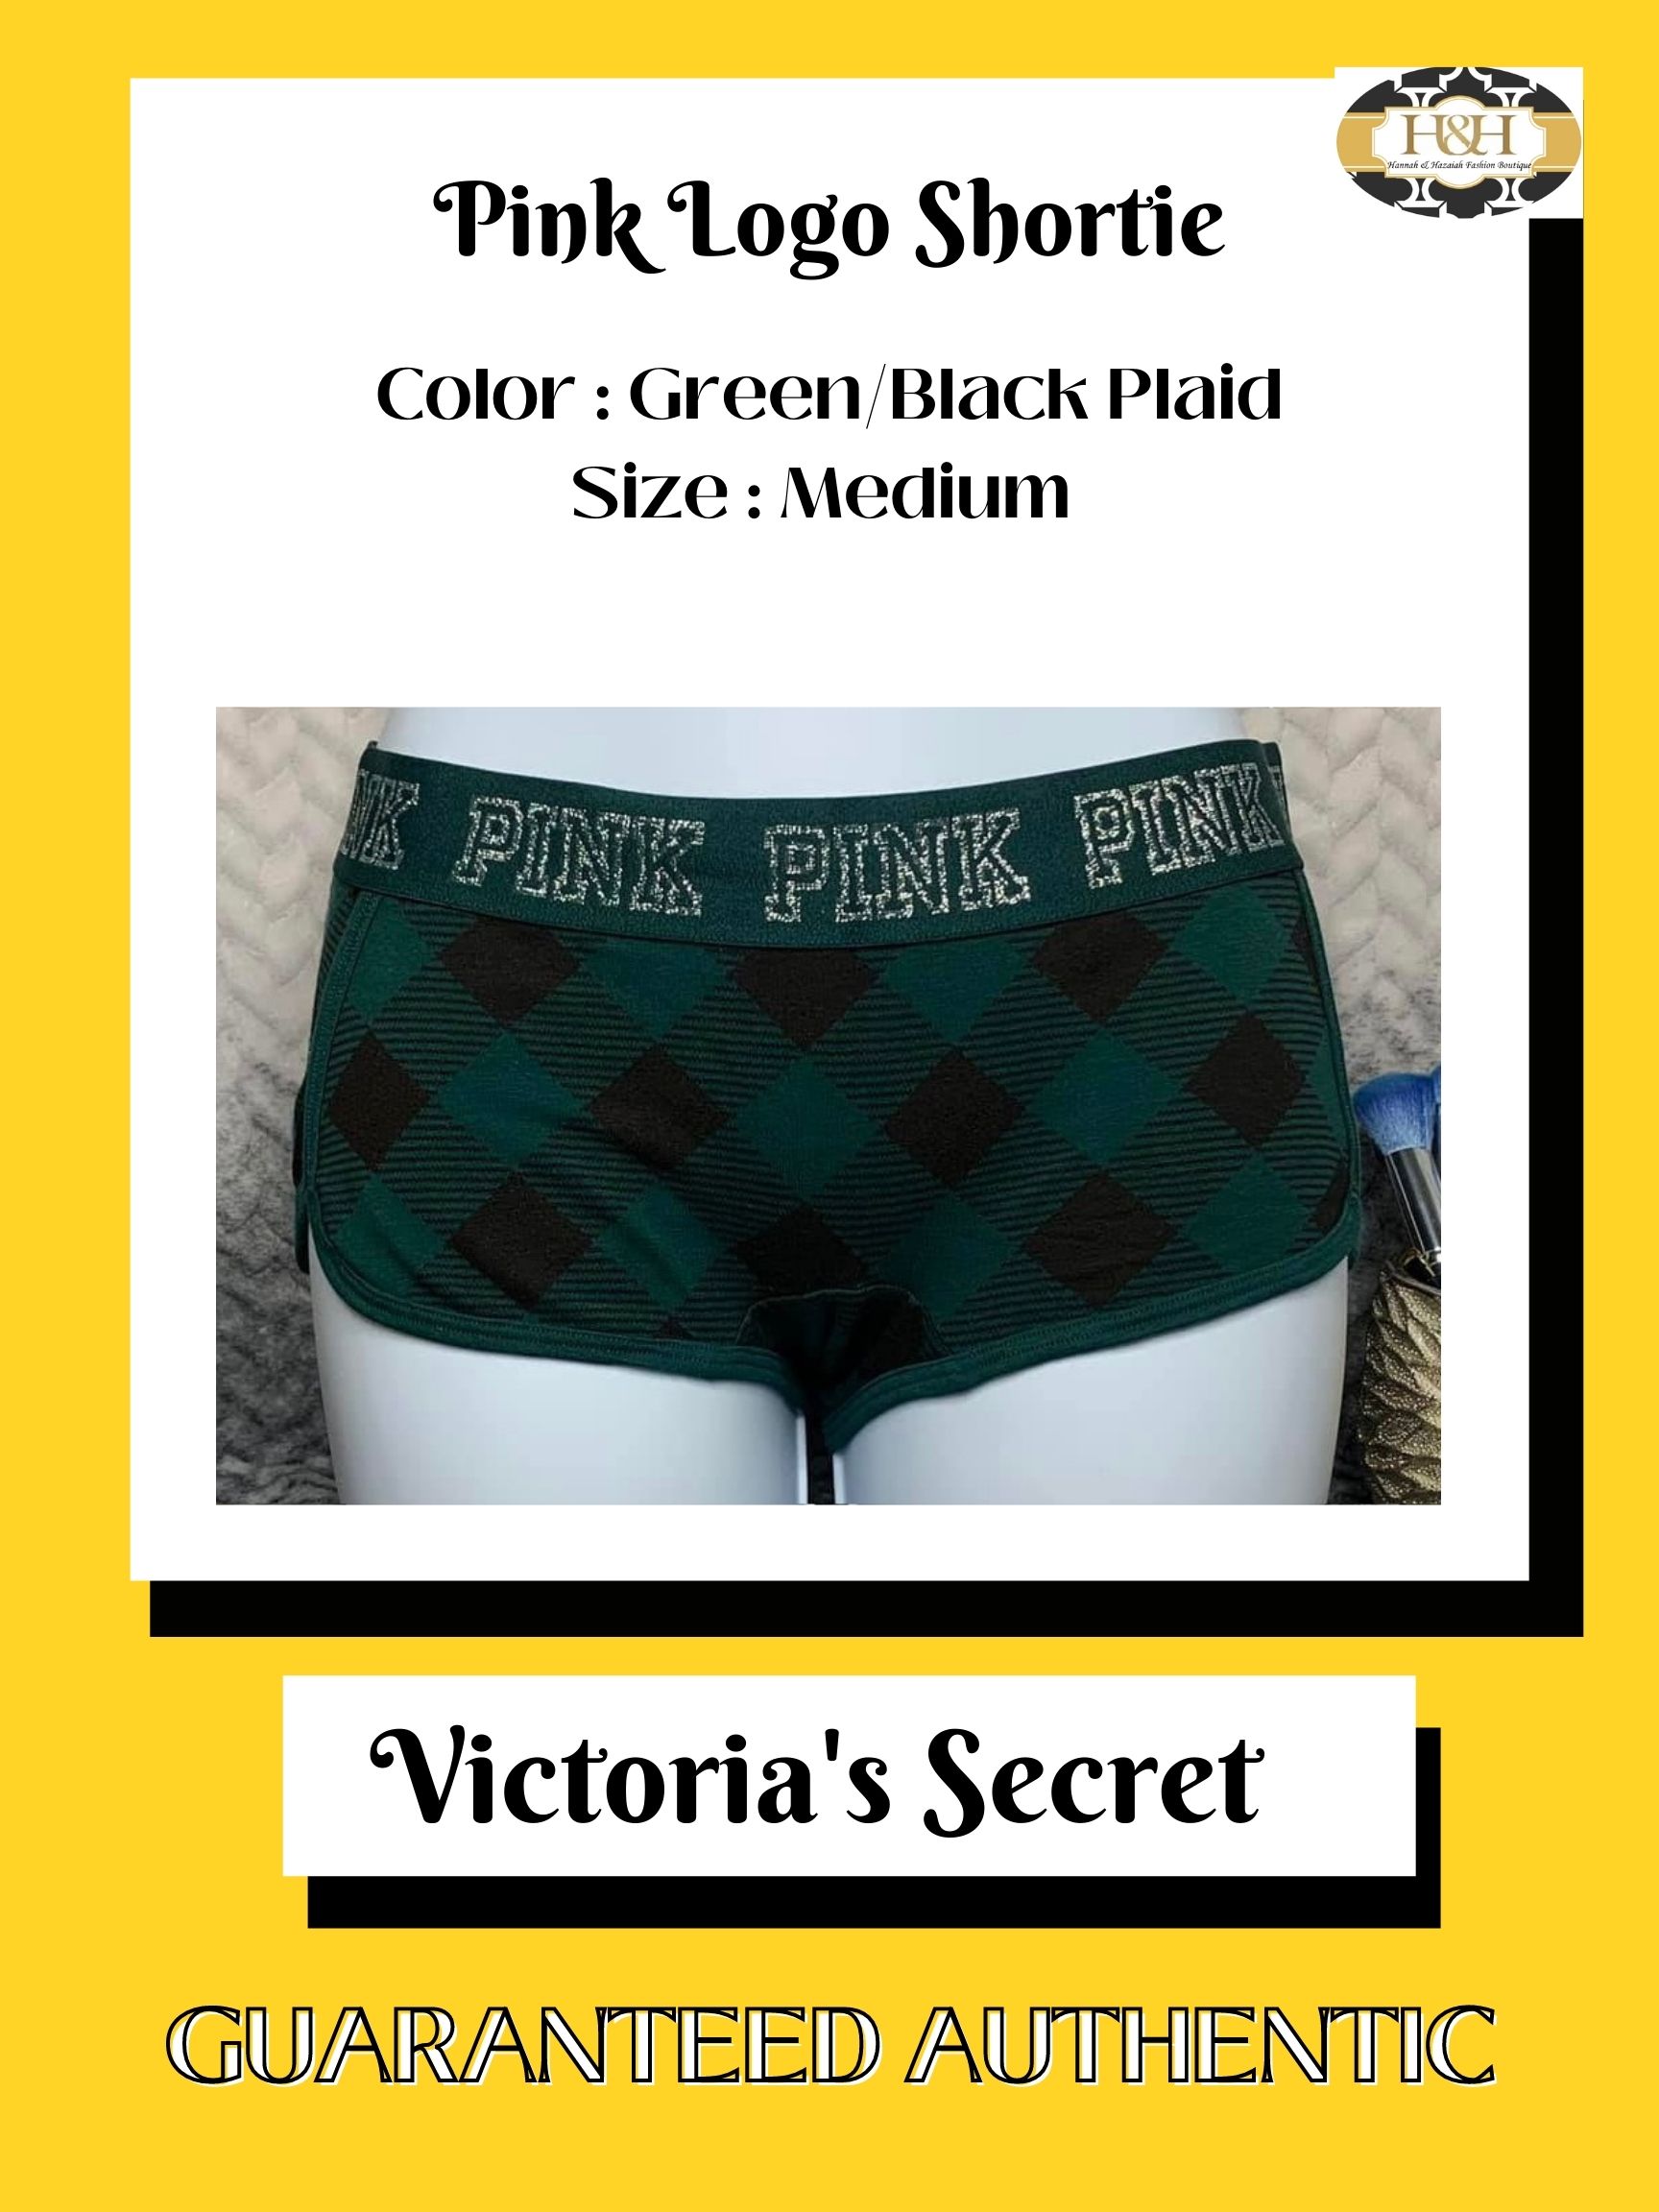 🇺🇸Authentic Victoria's Secret PINK Logo Shortie Underwear/Panty Available  in Medium Fits Waist 28 - 29